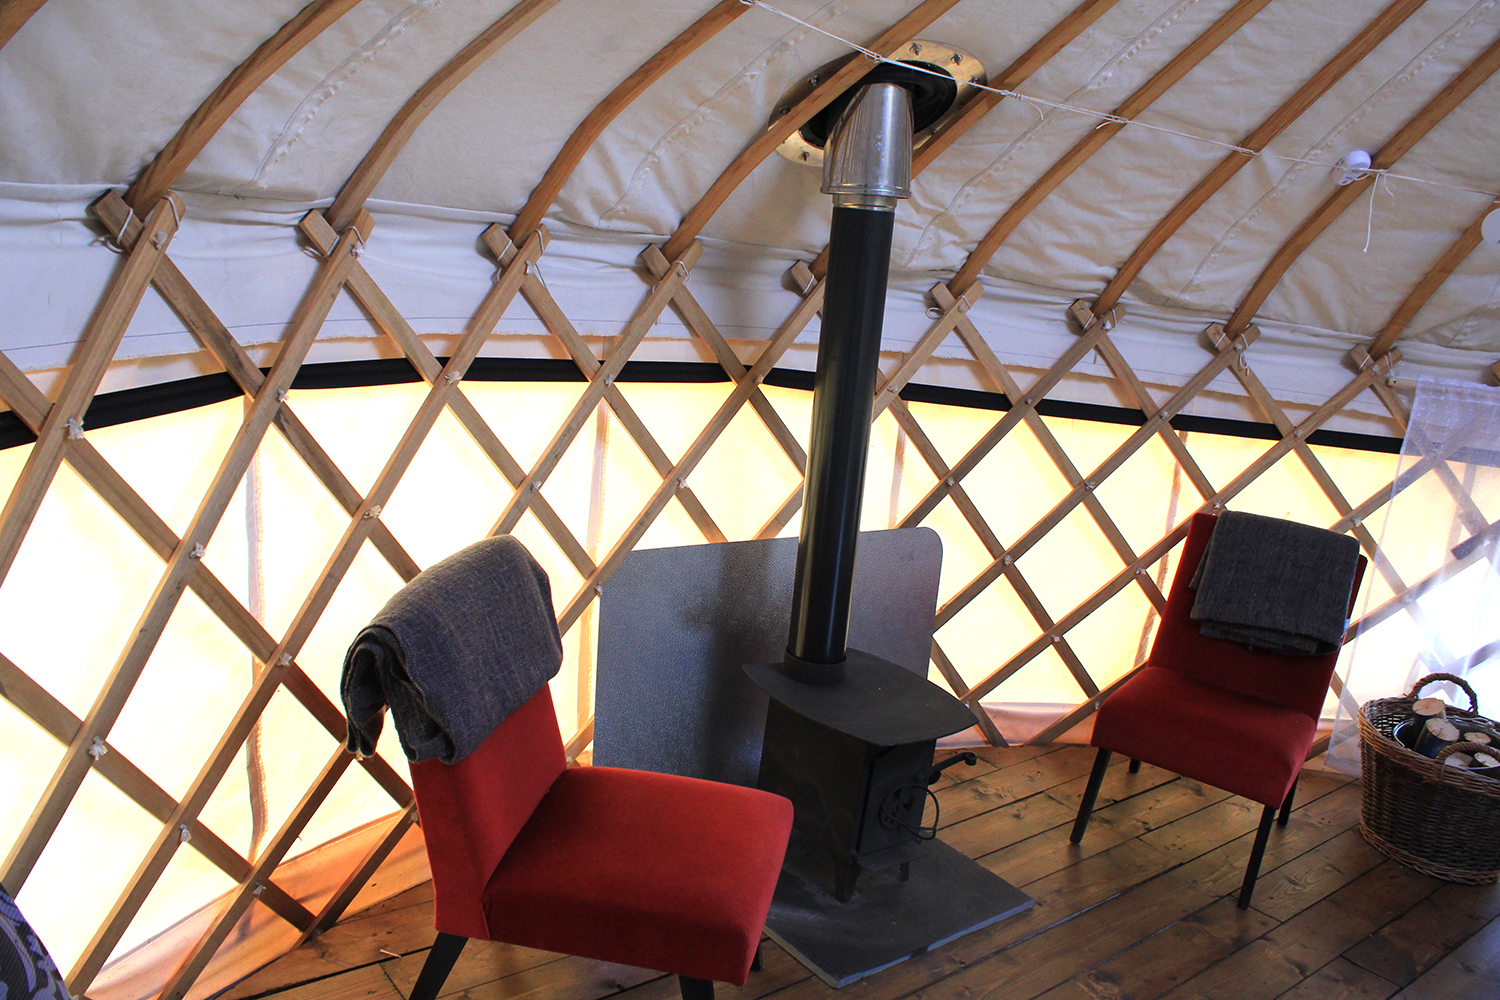 Inside the Red Kite Yurt at Cledan Valley Glamping